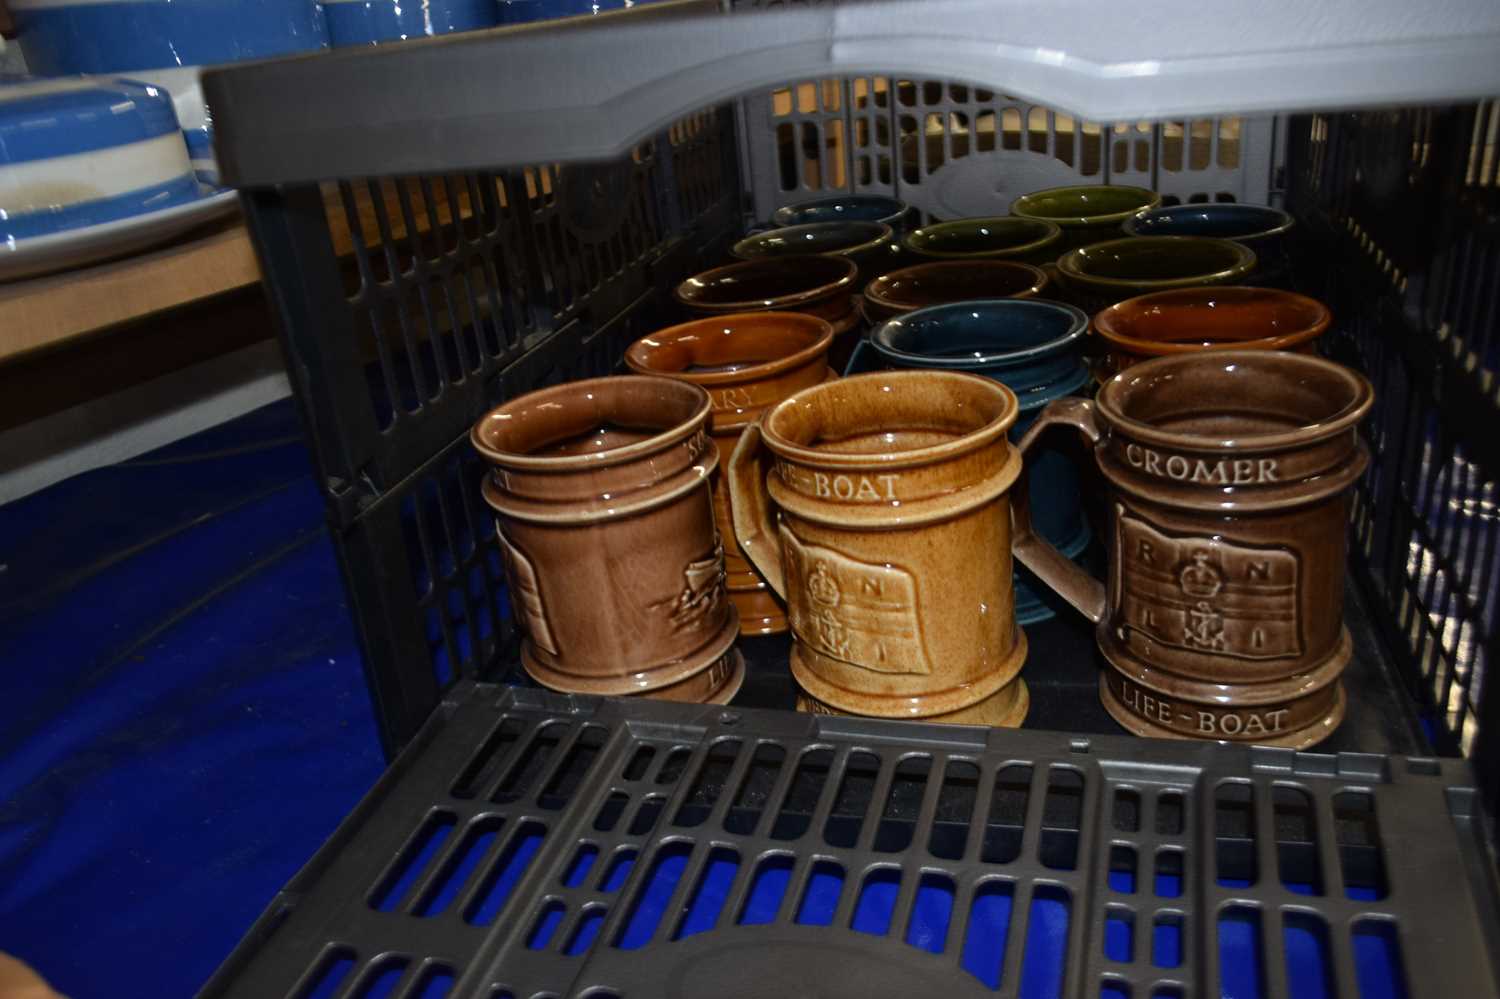 Fourteen RNLI Cromer Lifeboat pottery mugs